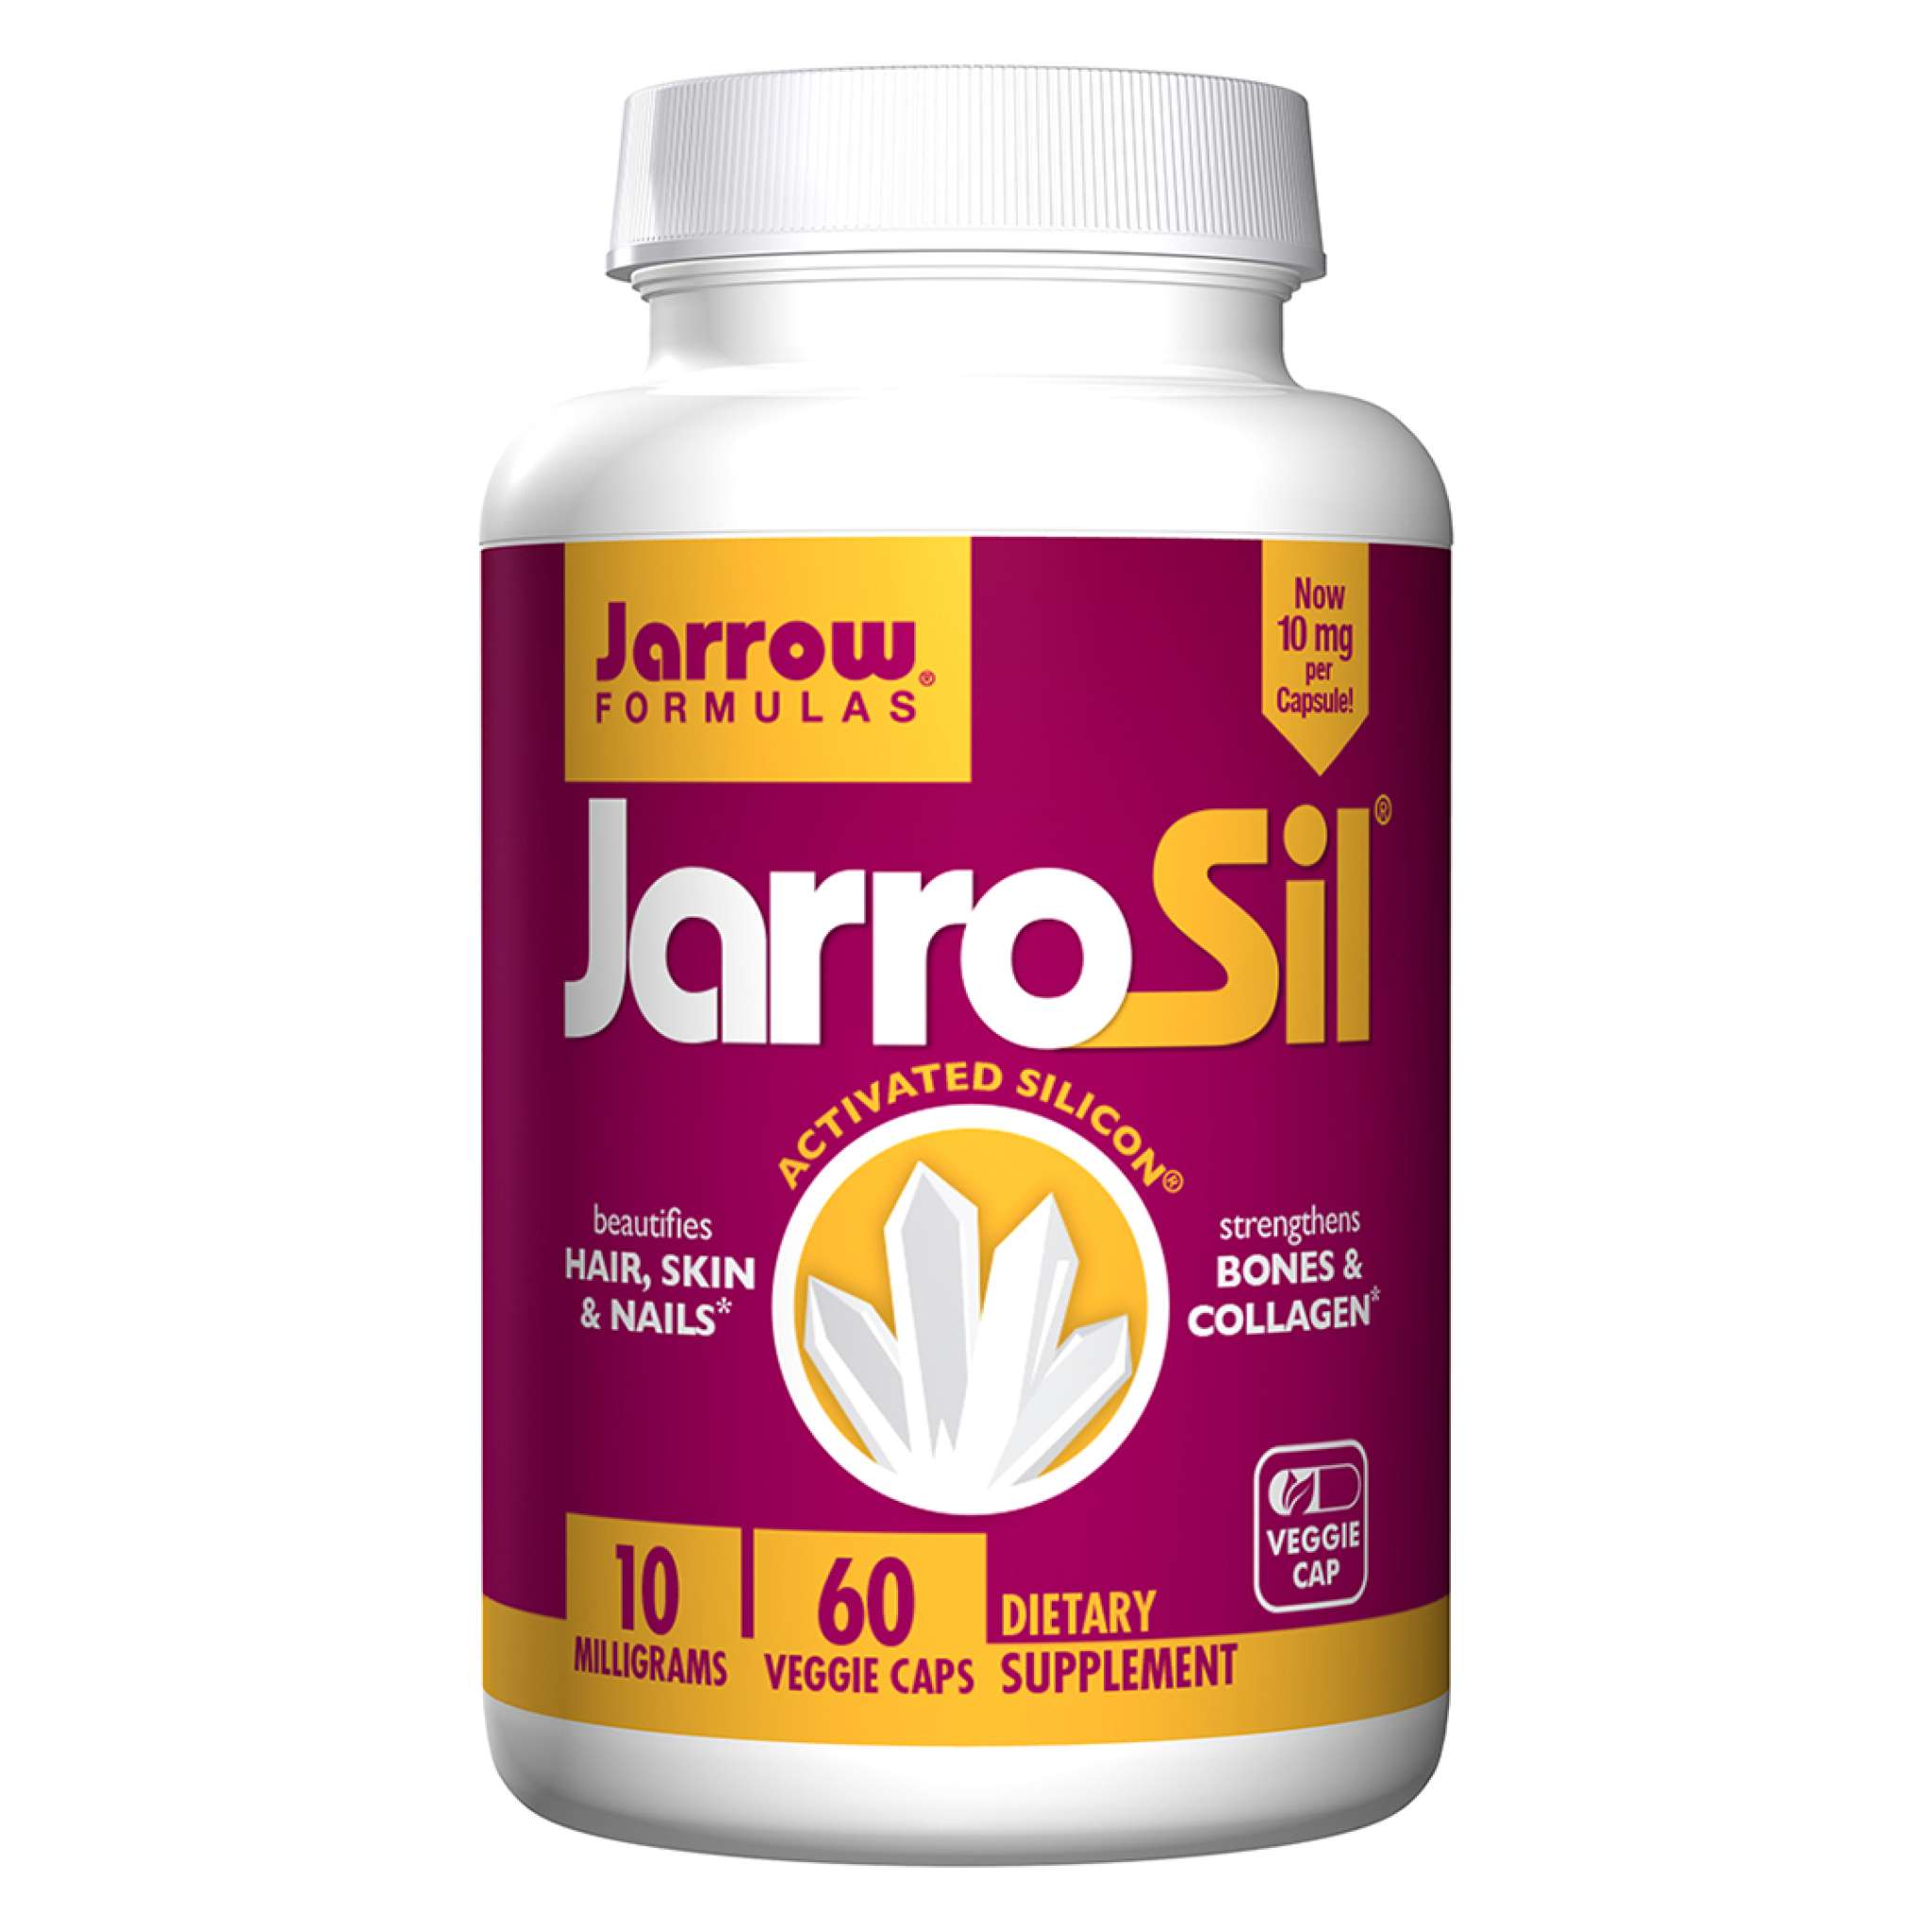 Jarrow Formulas - Jarrosil